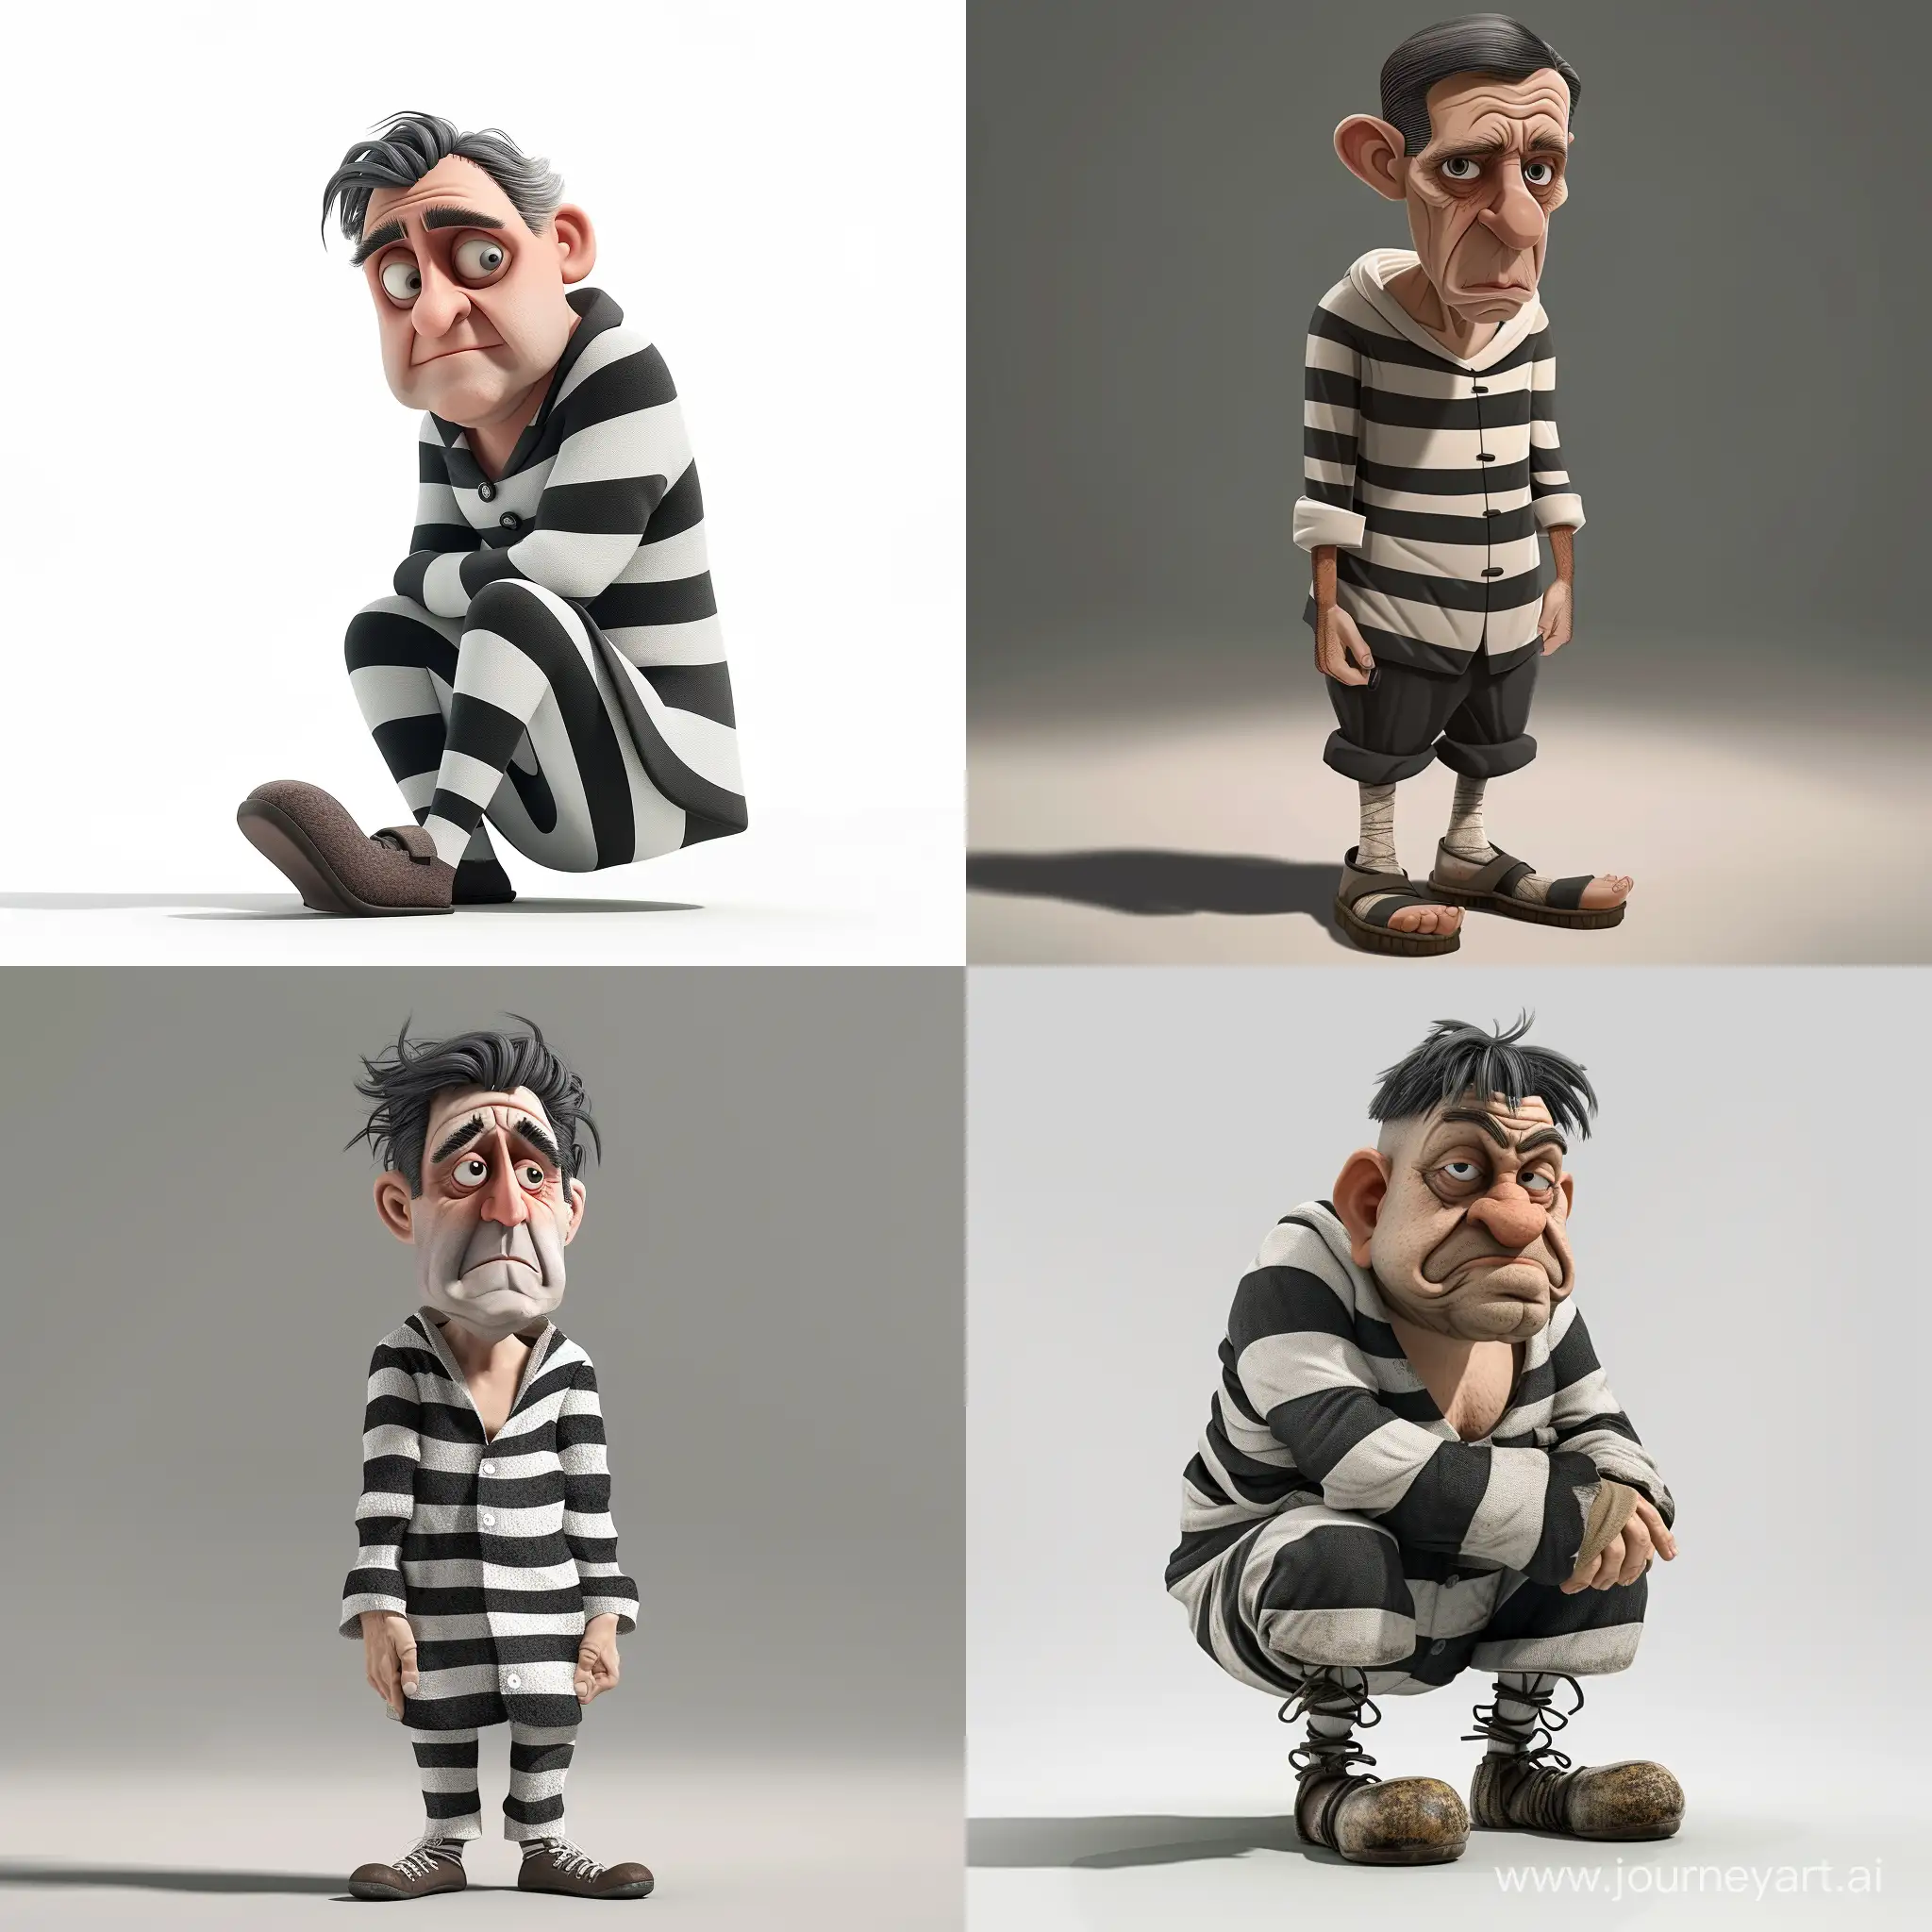 Thoughtful-MiddleAged-Cartoon-Prisoner-in-Striped-Attire